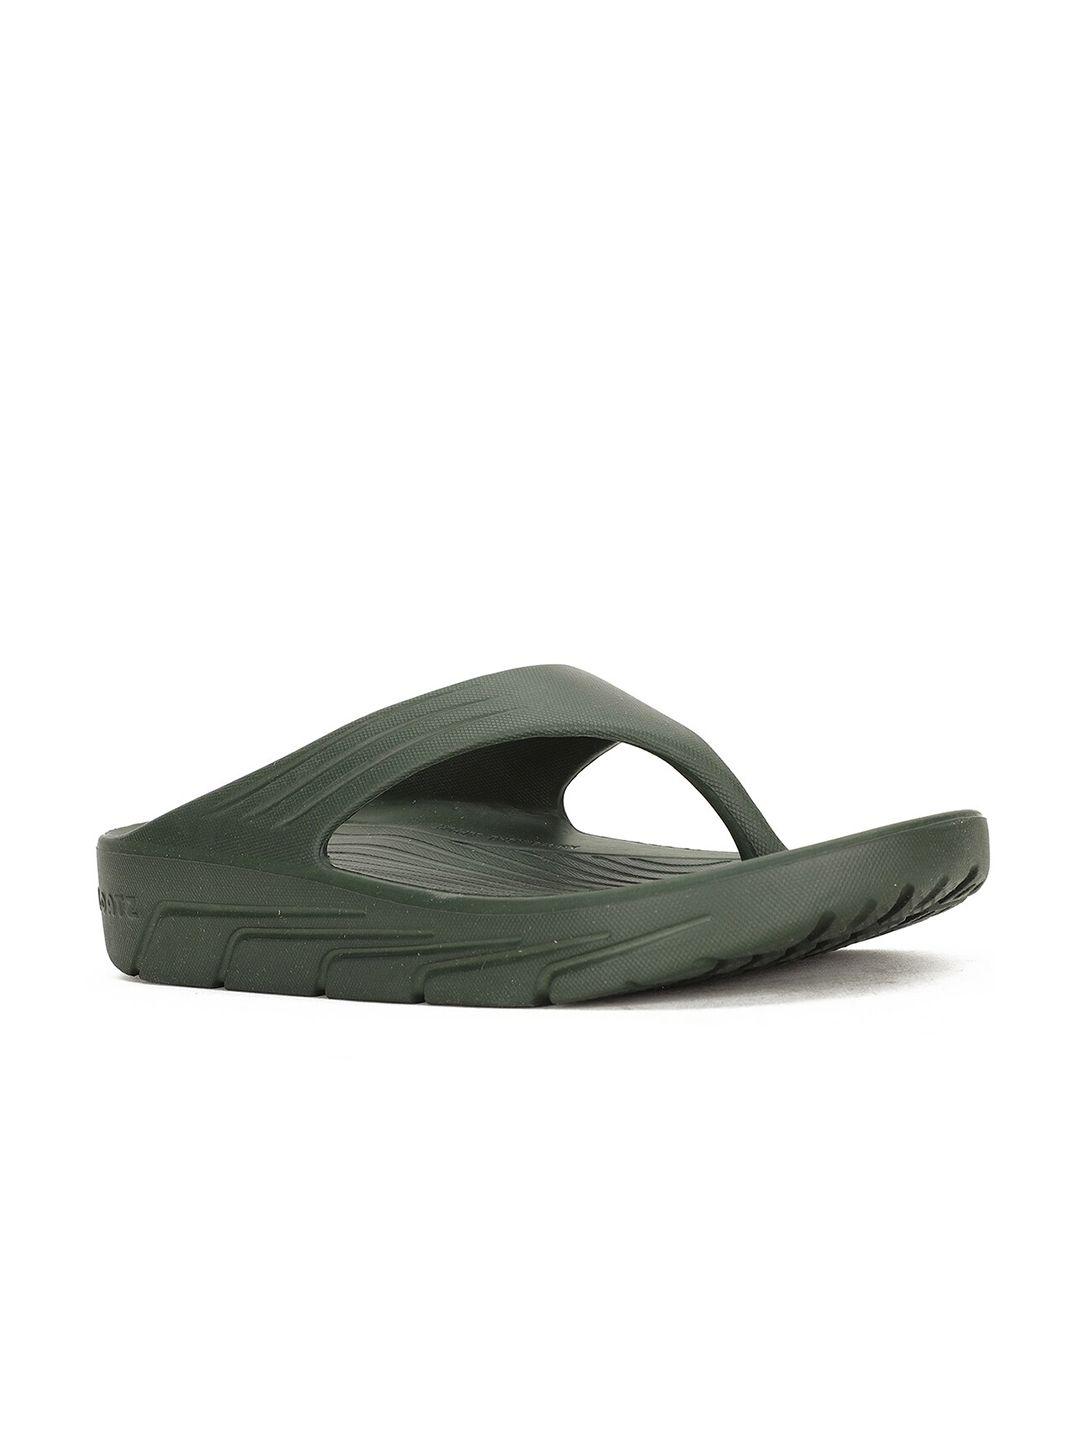 bata women olive green room slippers